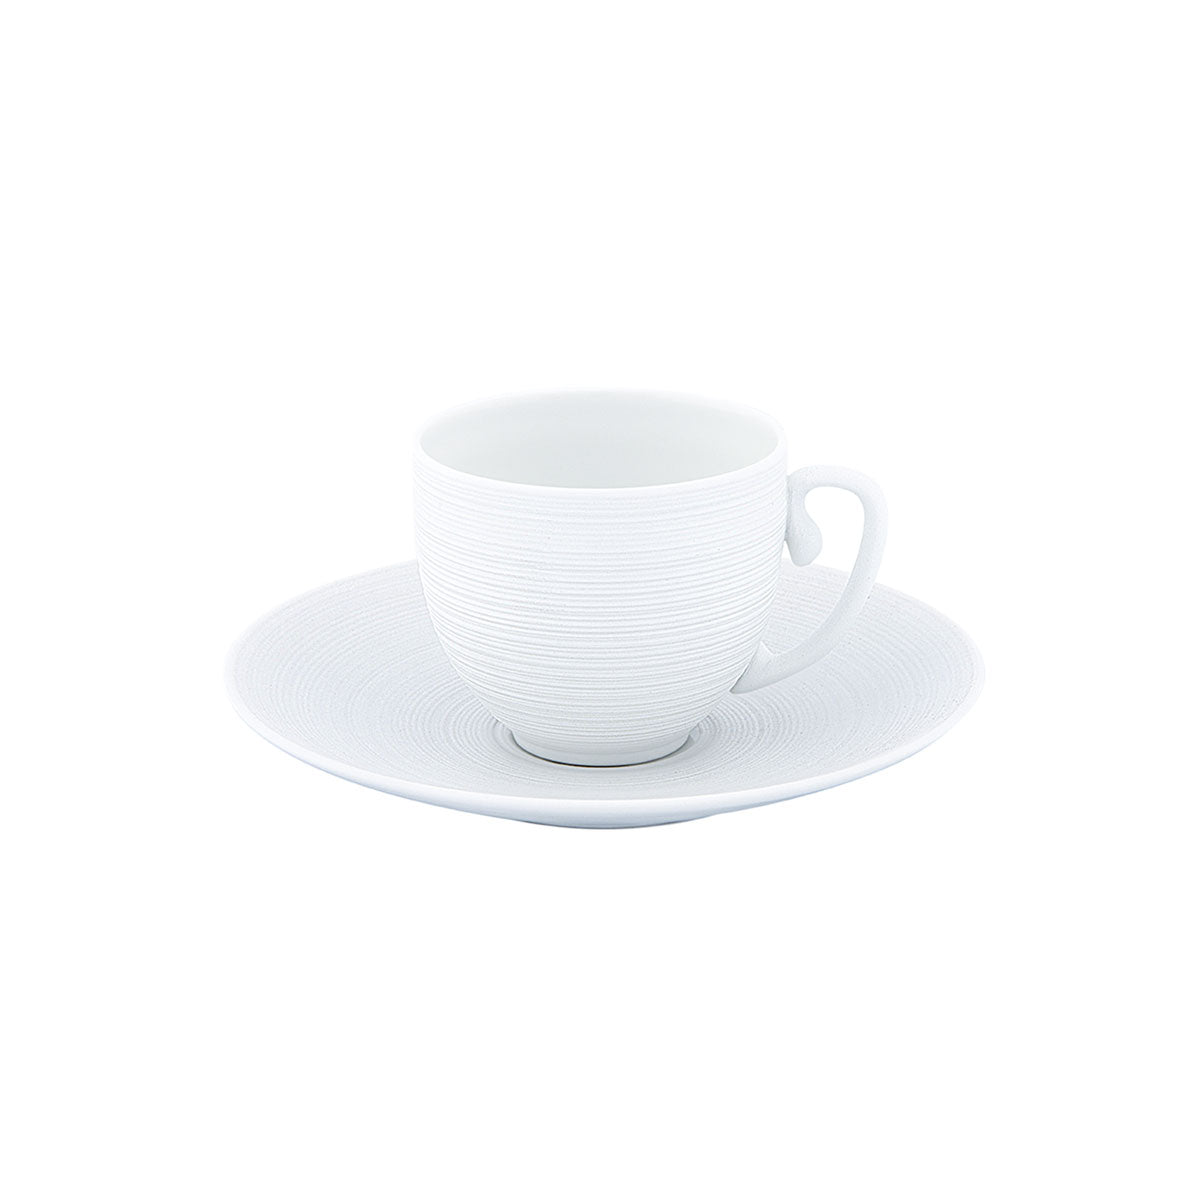 HEMISPHERE White Satin - Coffee set (cup & saucer), extra